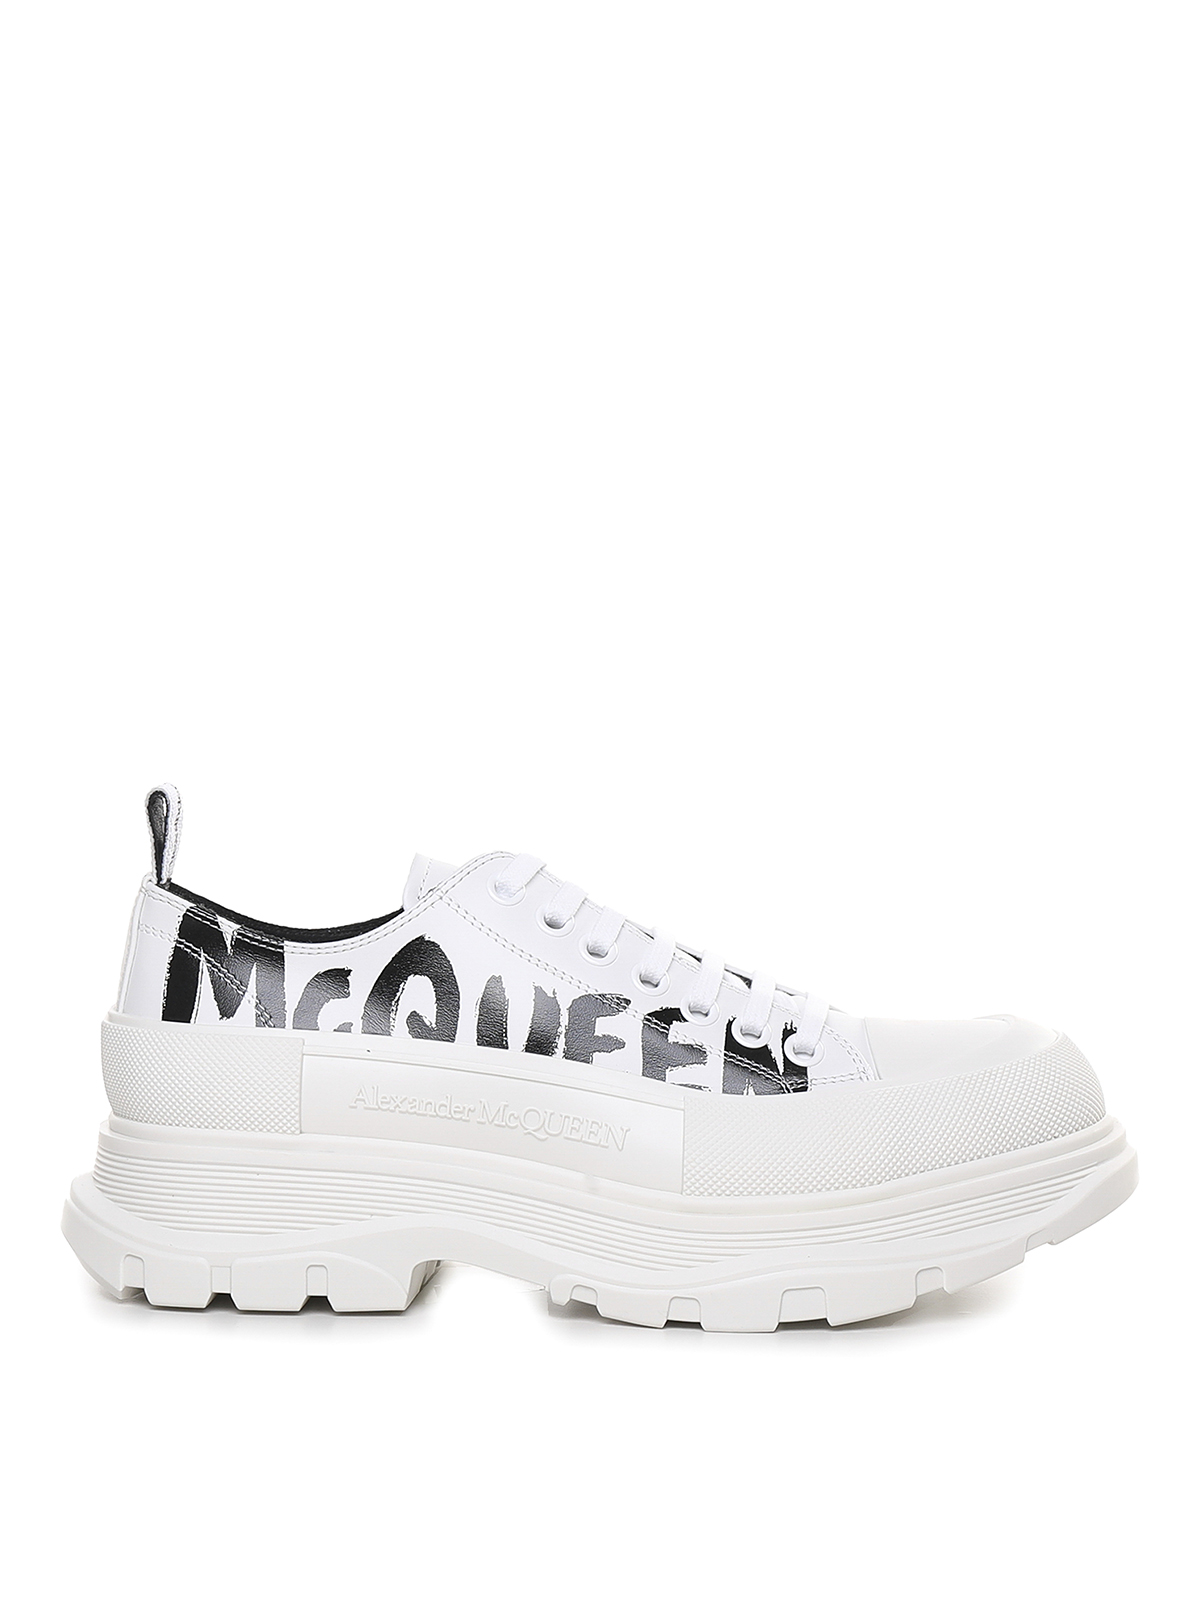 Alexander Mcqueen Graffiti Logo Sneakers In White